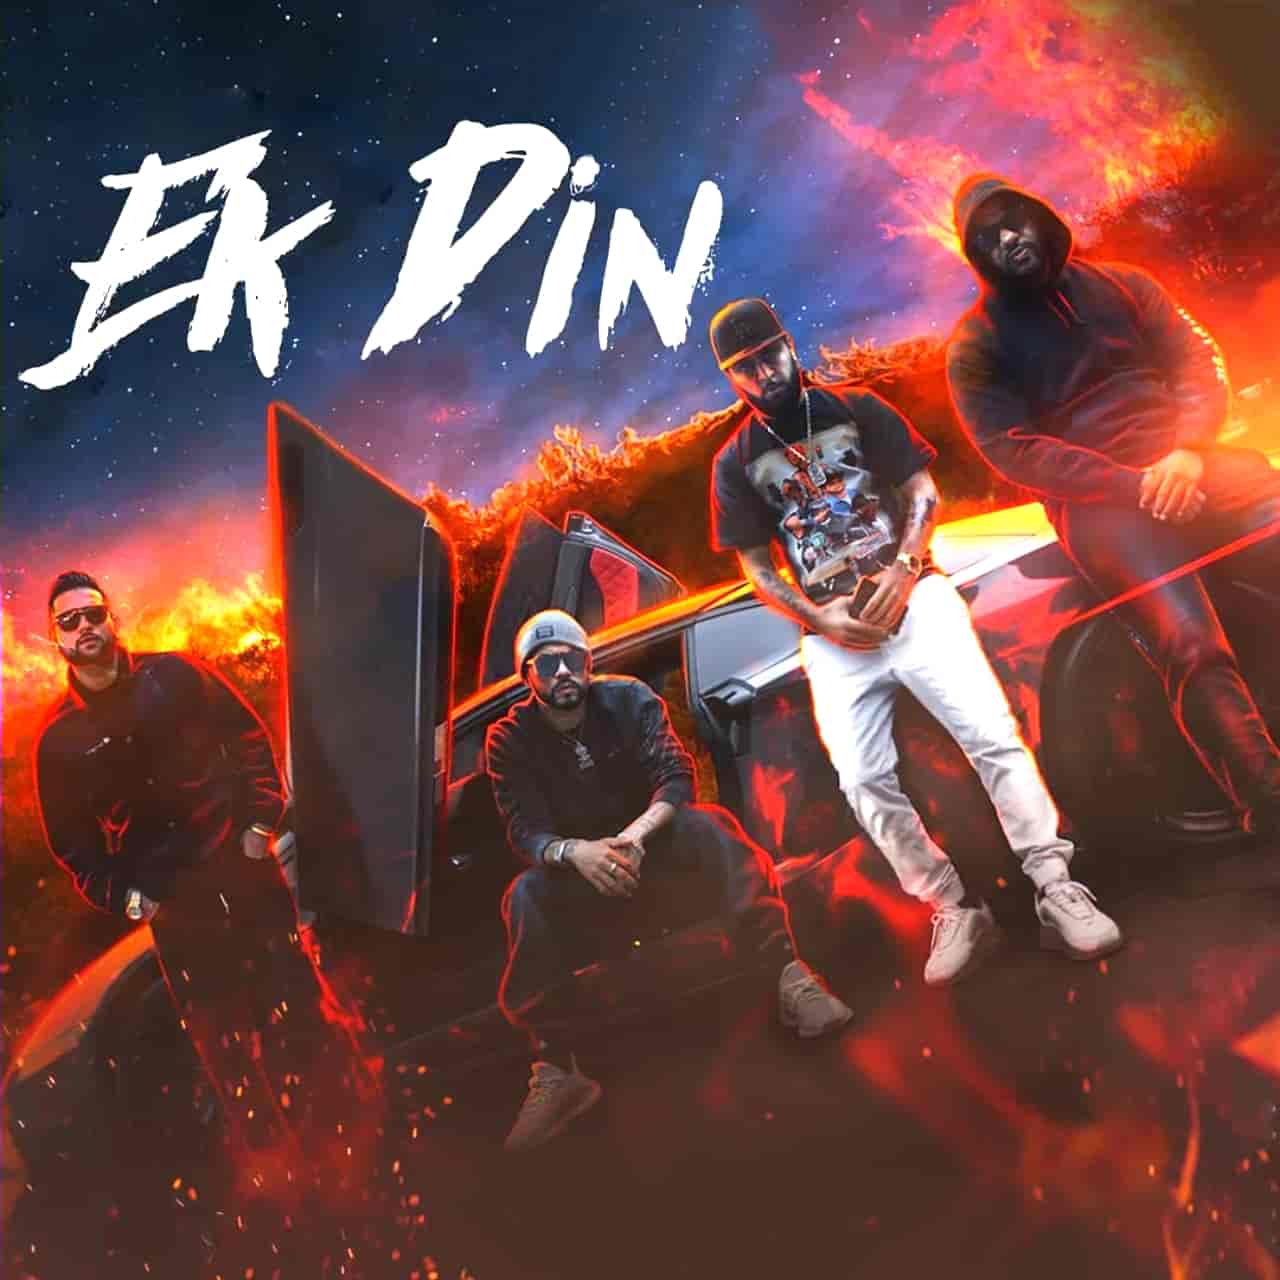 Ek Din Punjabi Rap Song Image Features Bohemia and Karan Aujla